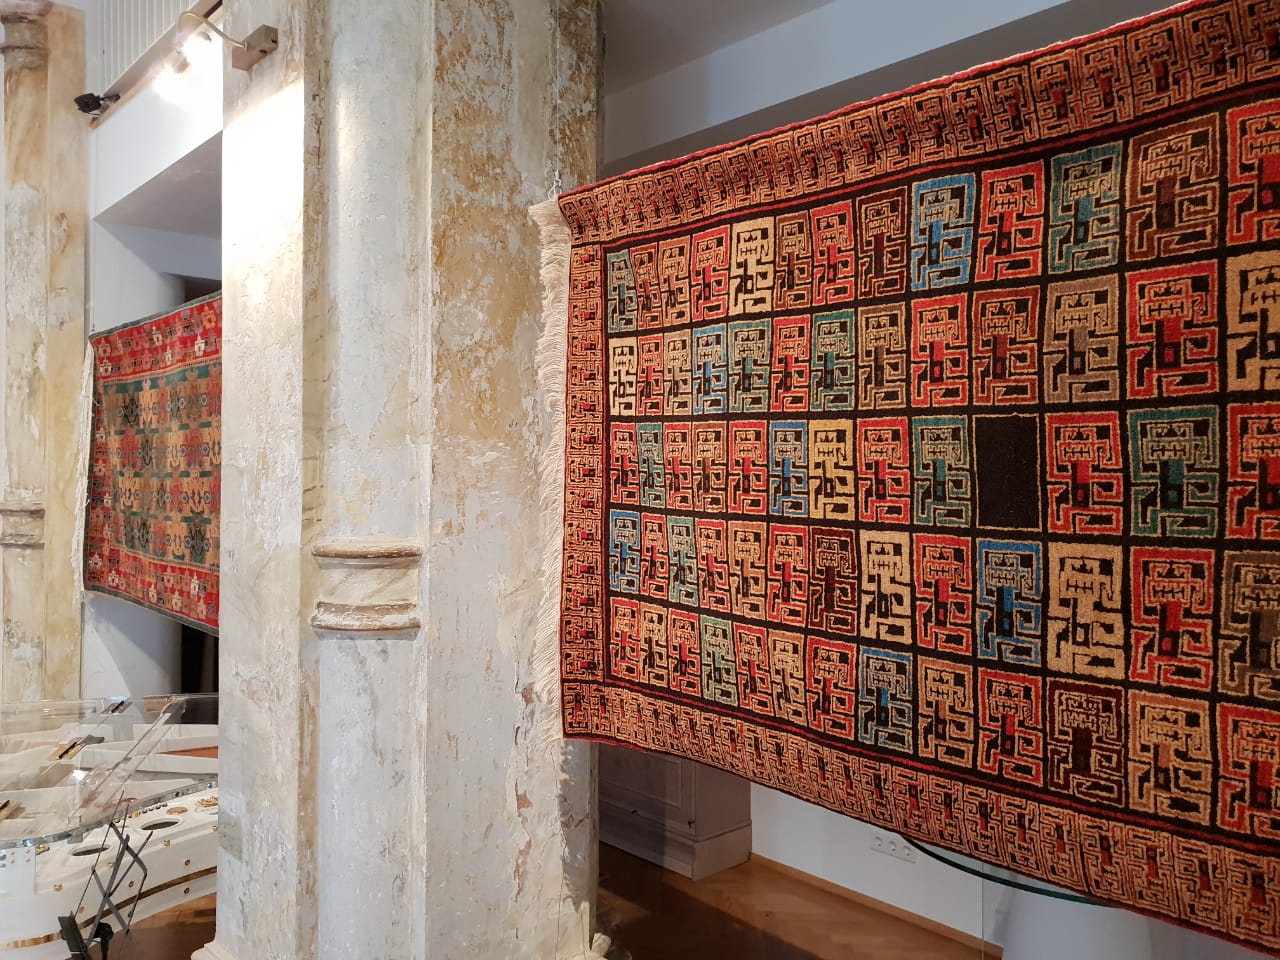 Carpet Art: Evolution of Meanings (Vienna, Austria)